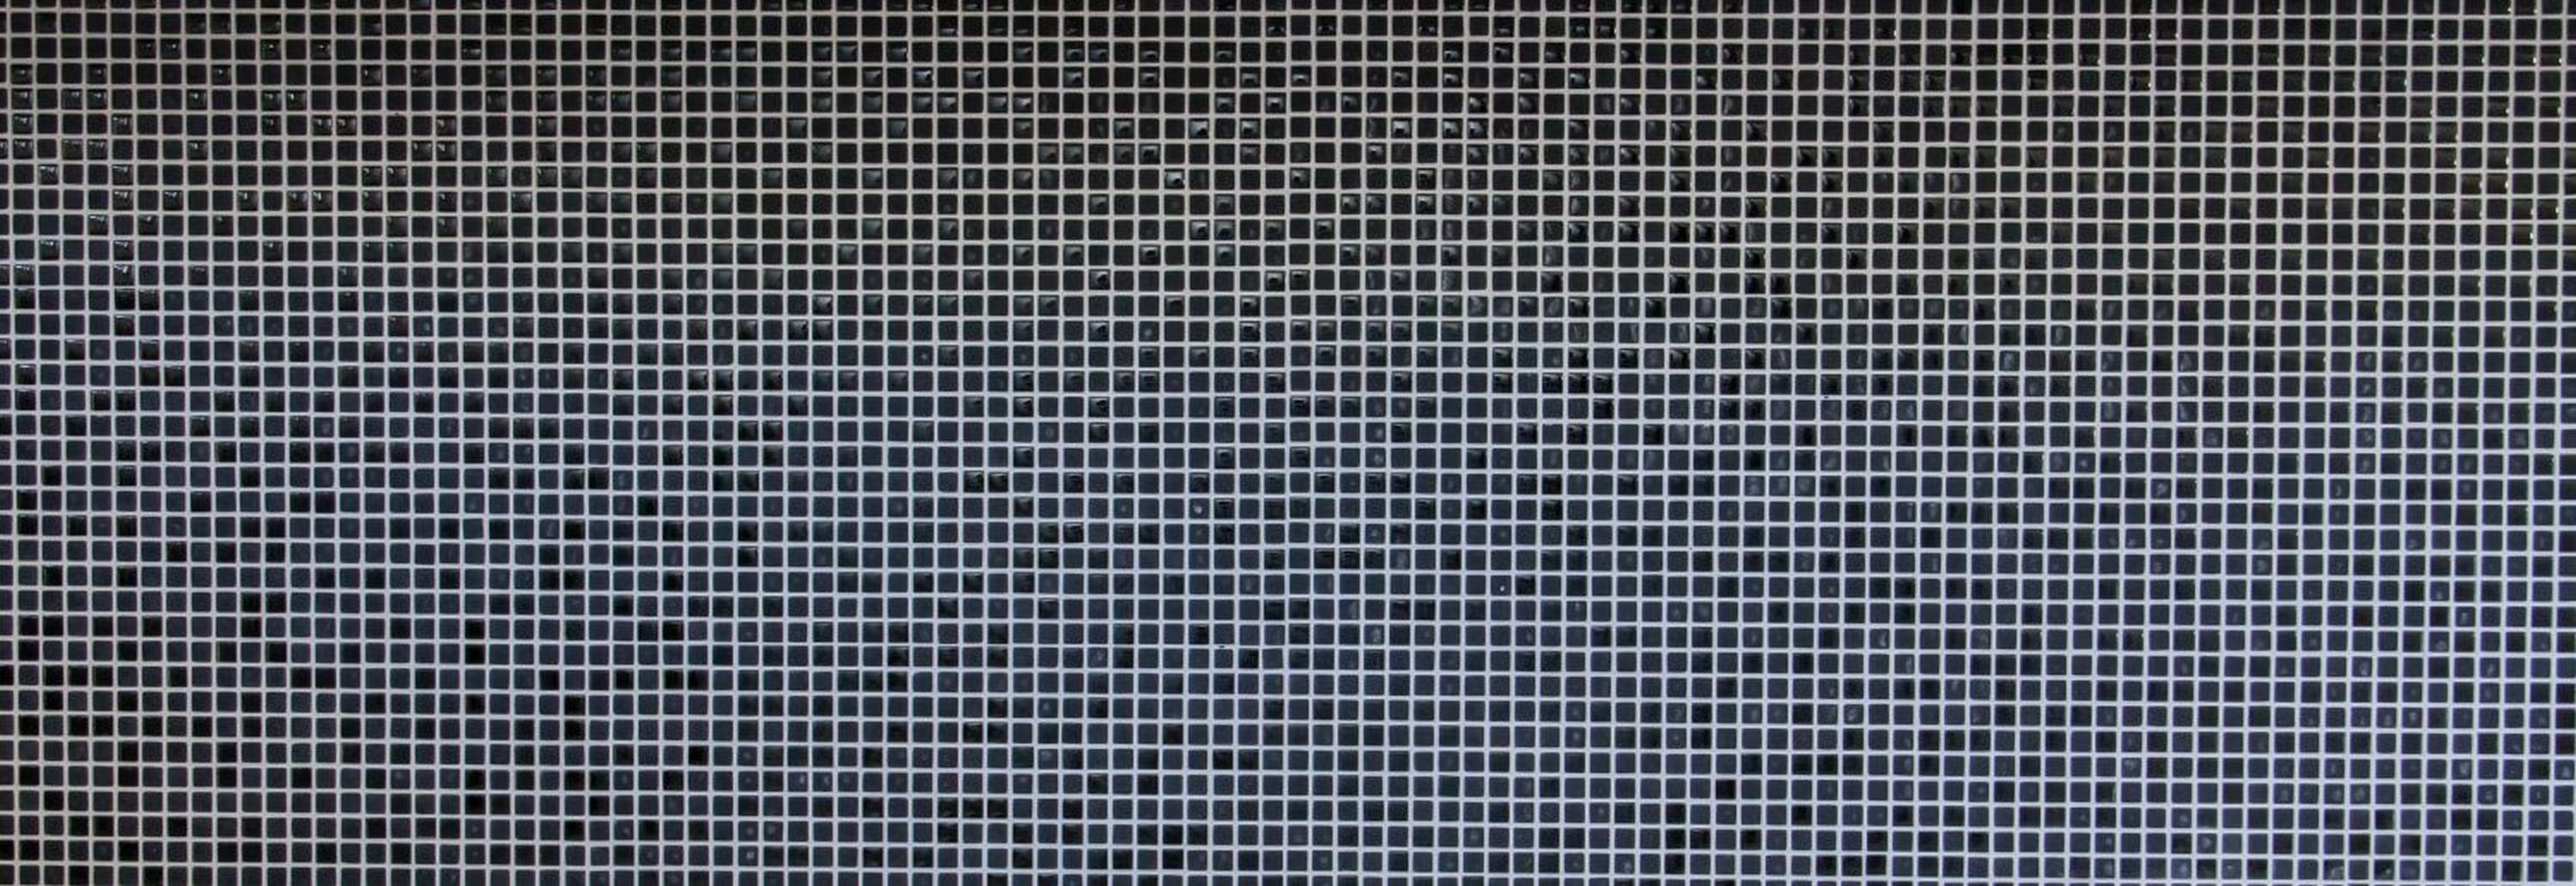 Glasmosaik Nachhaltiger Wandbelag Mosani anthrazit Mosaikfliesen Recycling schwarz Enamel